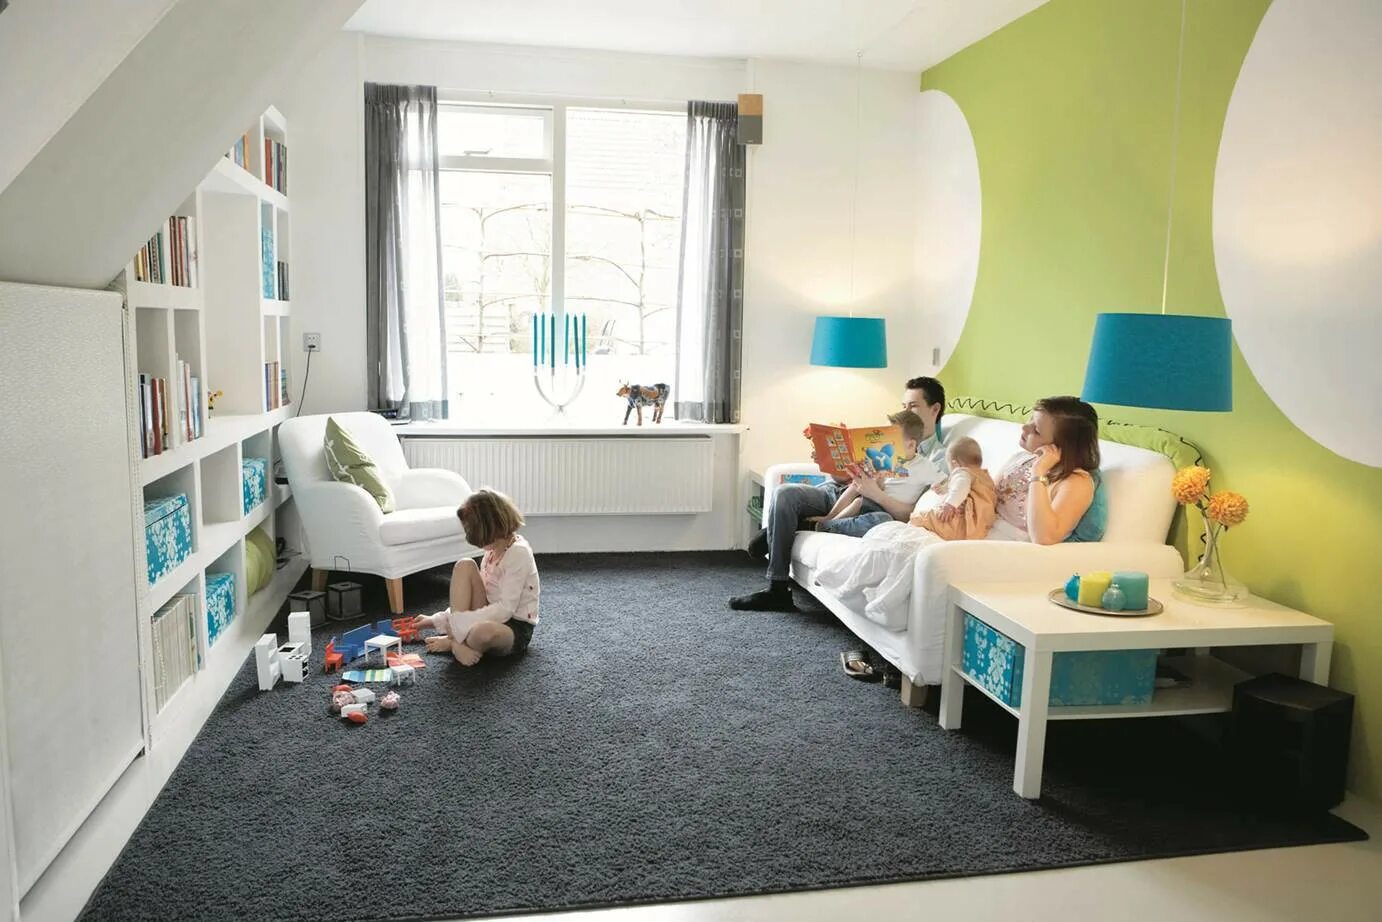 Живем все одной комнате. Комната для детей. Комната детского психолога. Комната аутиста. Комната ребенка аутиста.